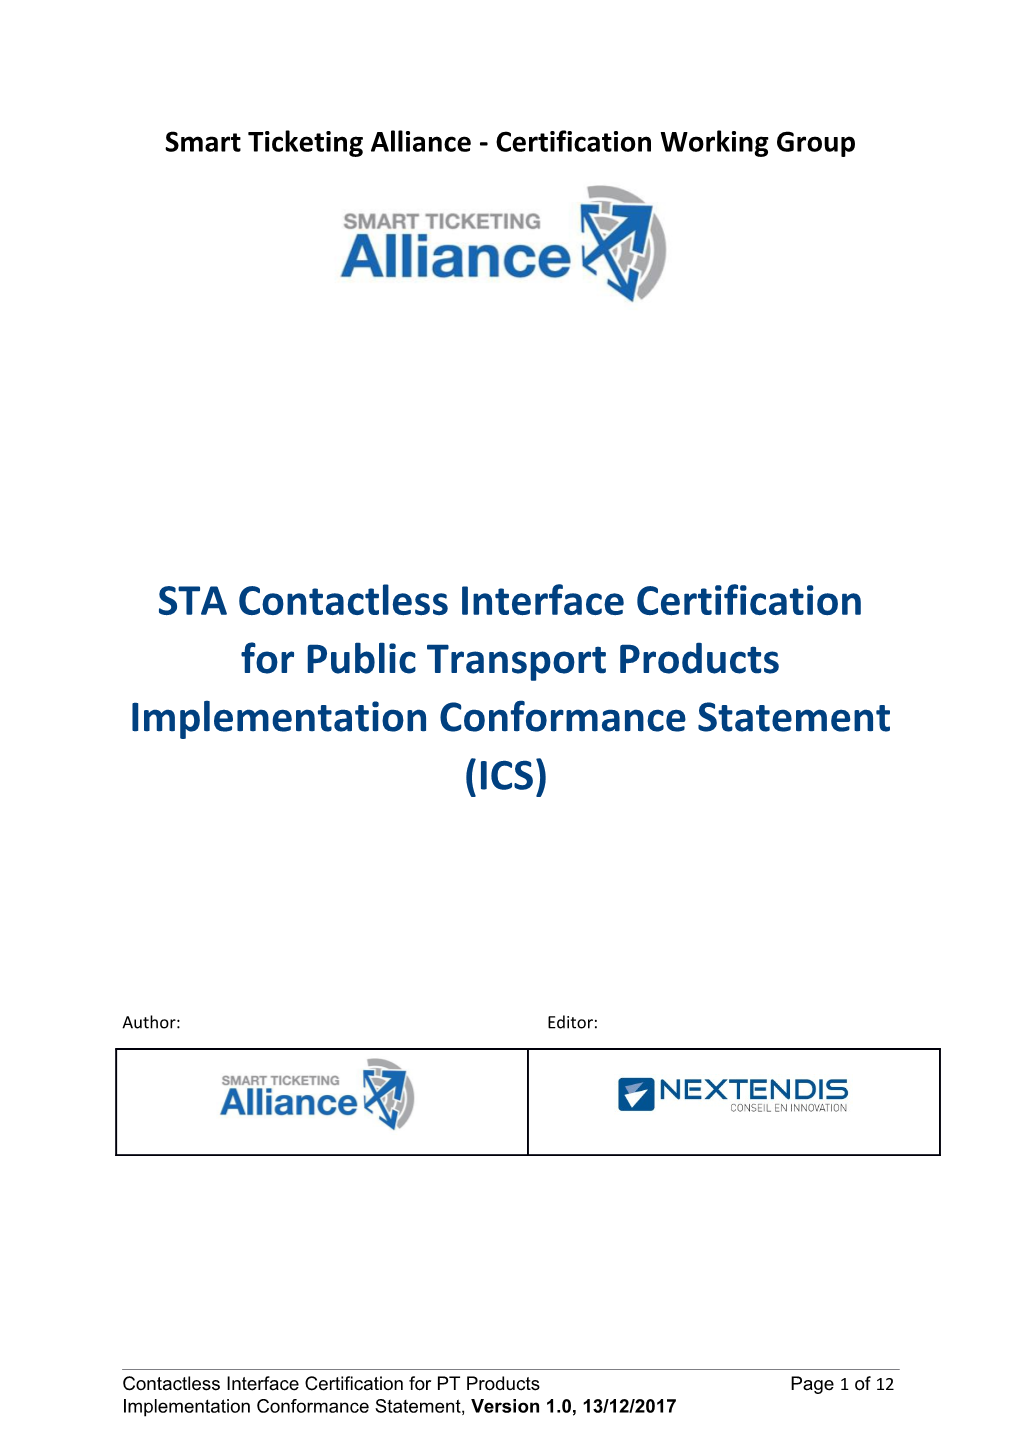 STA Implementation Conformance Statement (ICS)